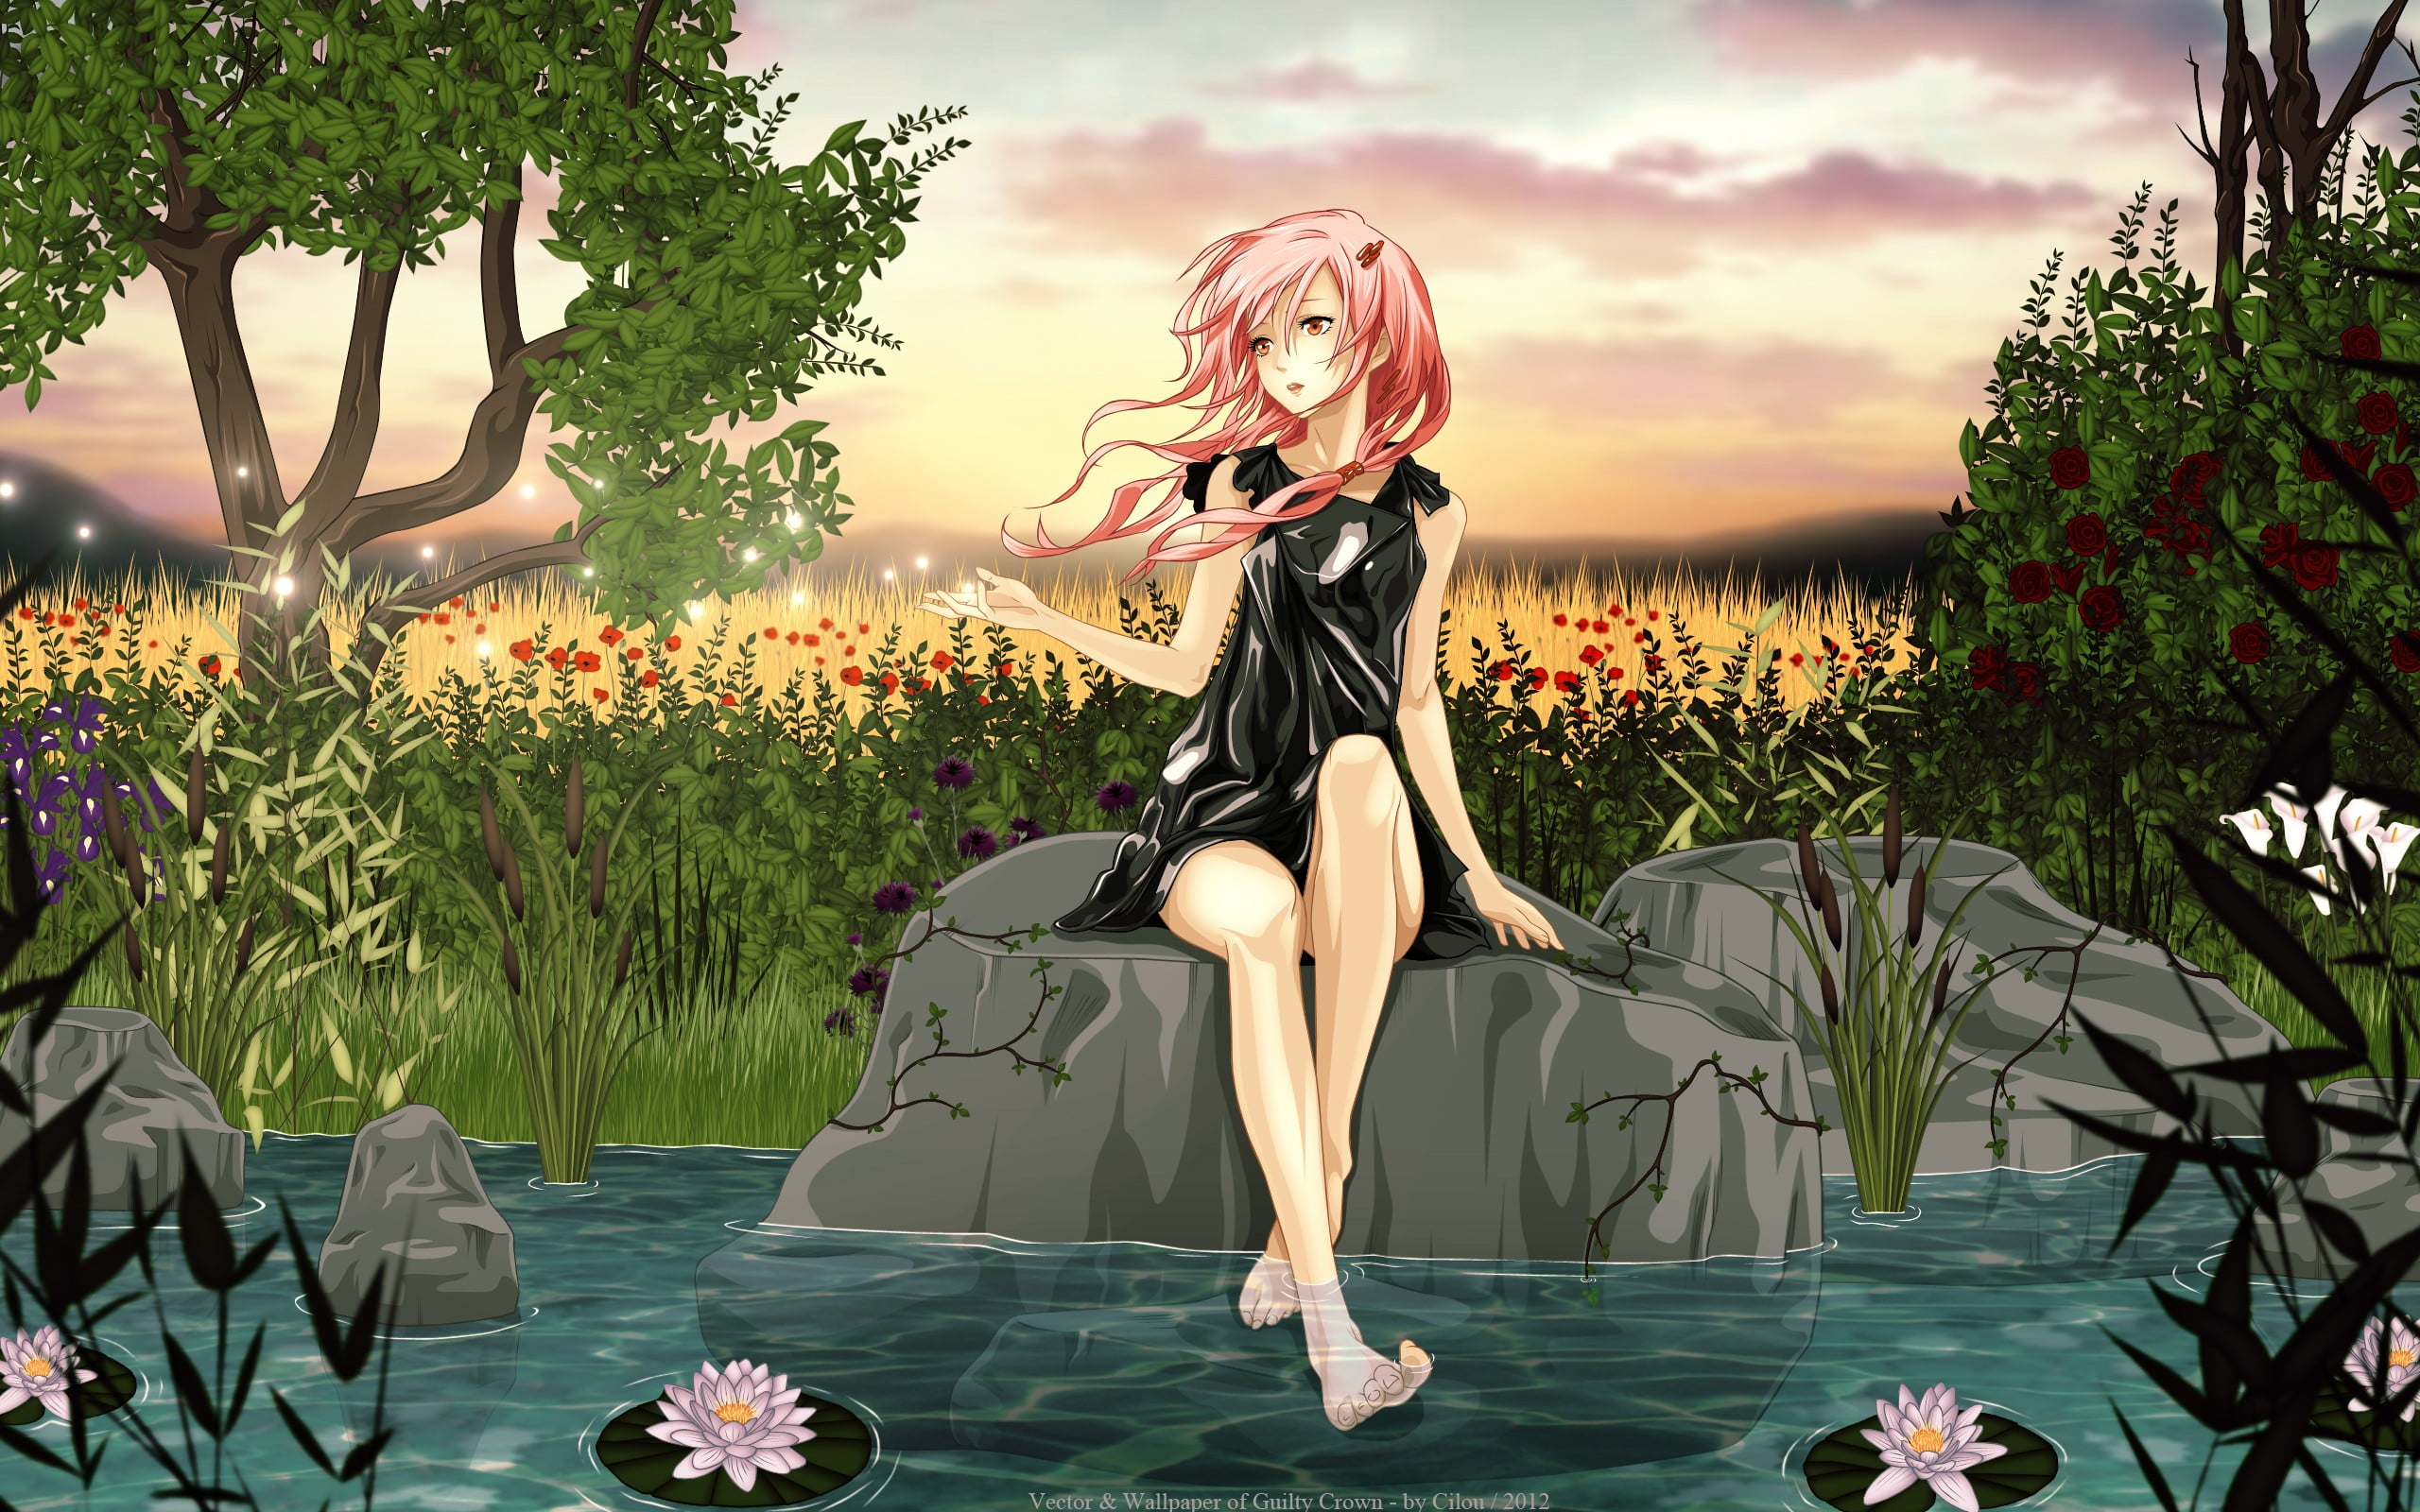 Tải xuống APK Dr stone HD wallpapers - Senku Anime 4k cho Android